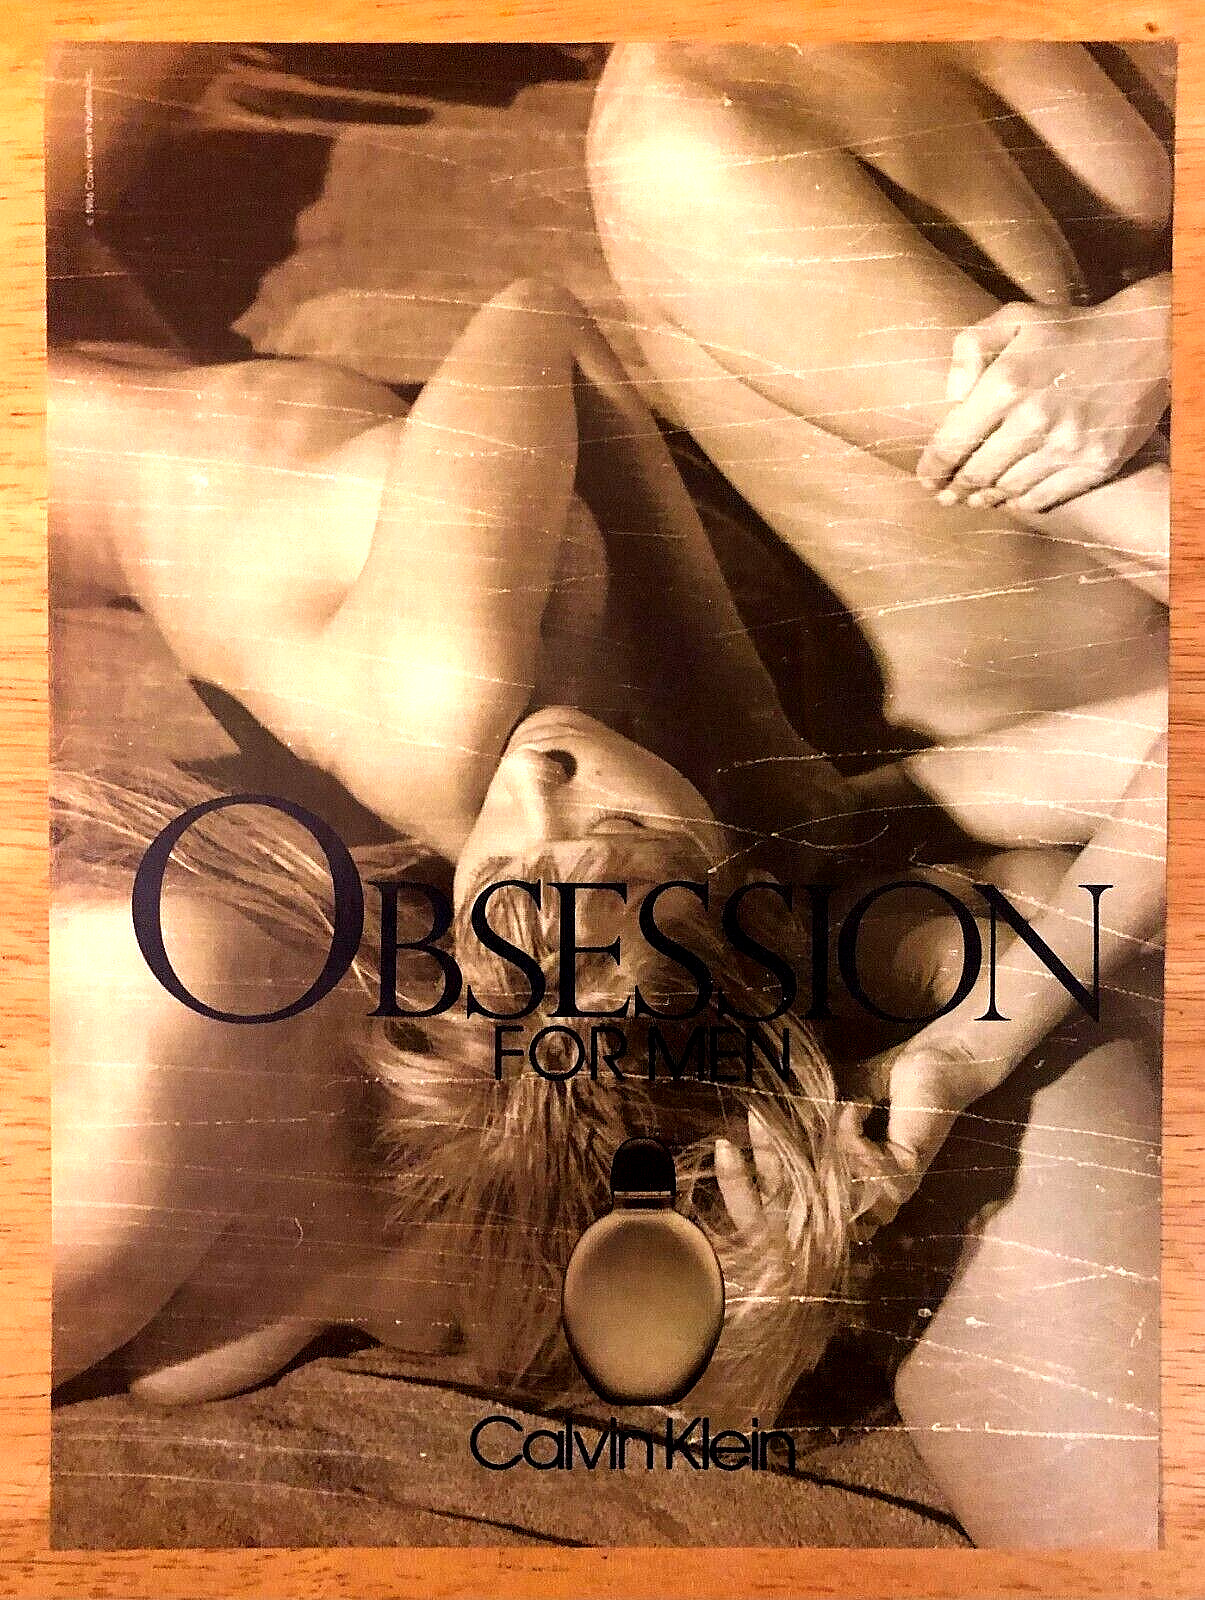 Calvin Klein's Obsession For Men—original 1986 Magazine Print Ad